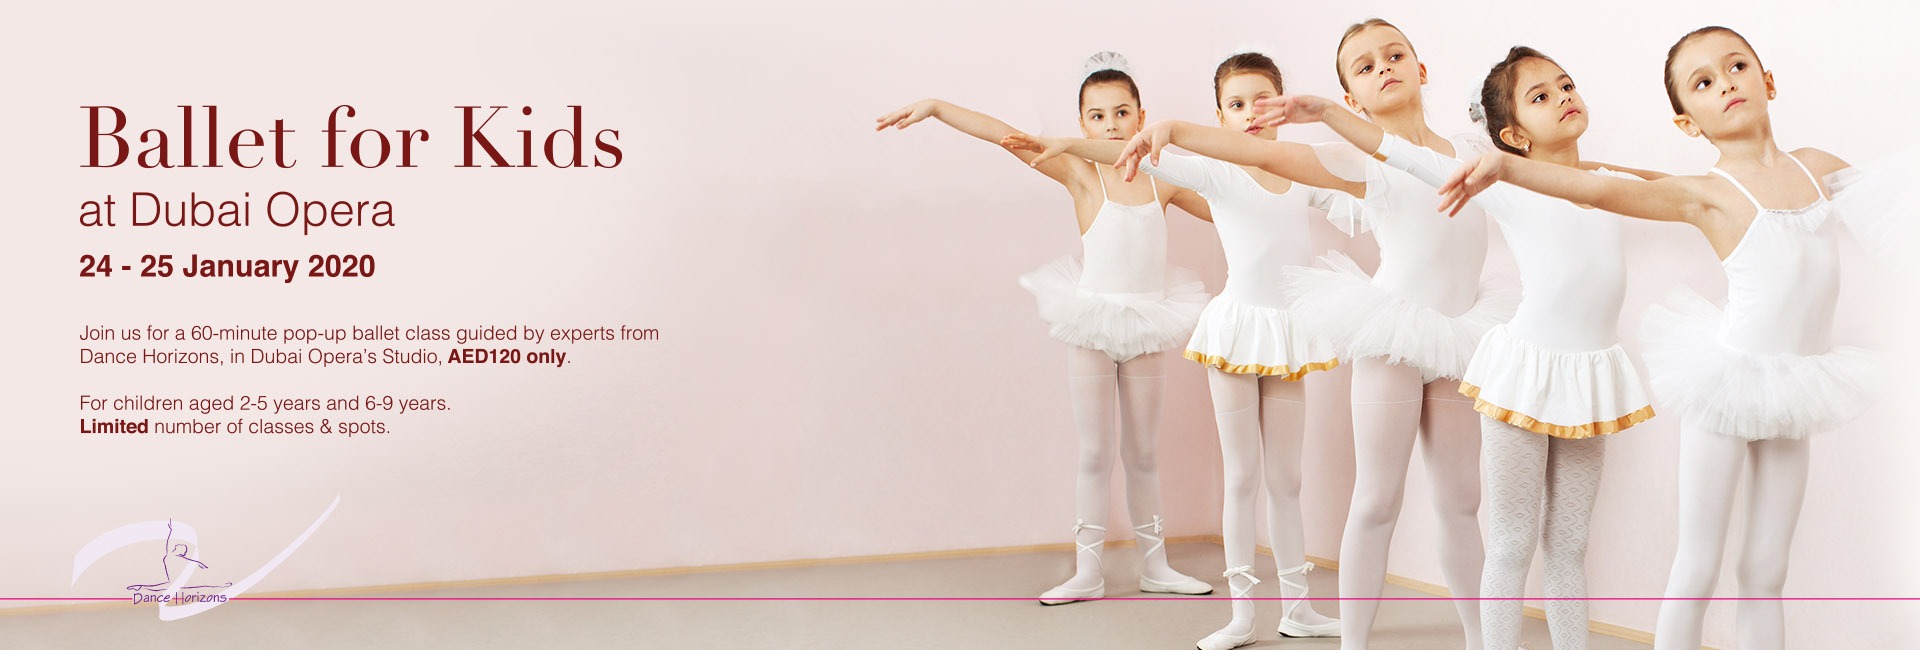 Ballet for Kids at Dubai Opera - Coming Soon in UAE